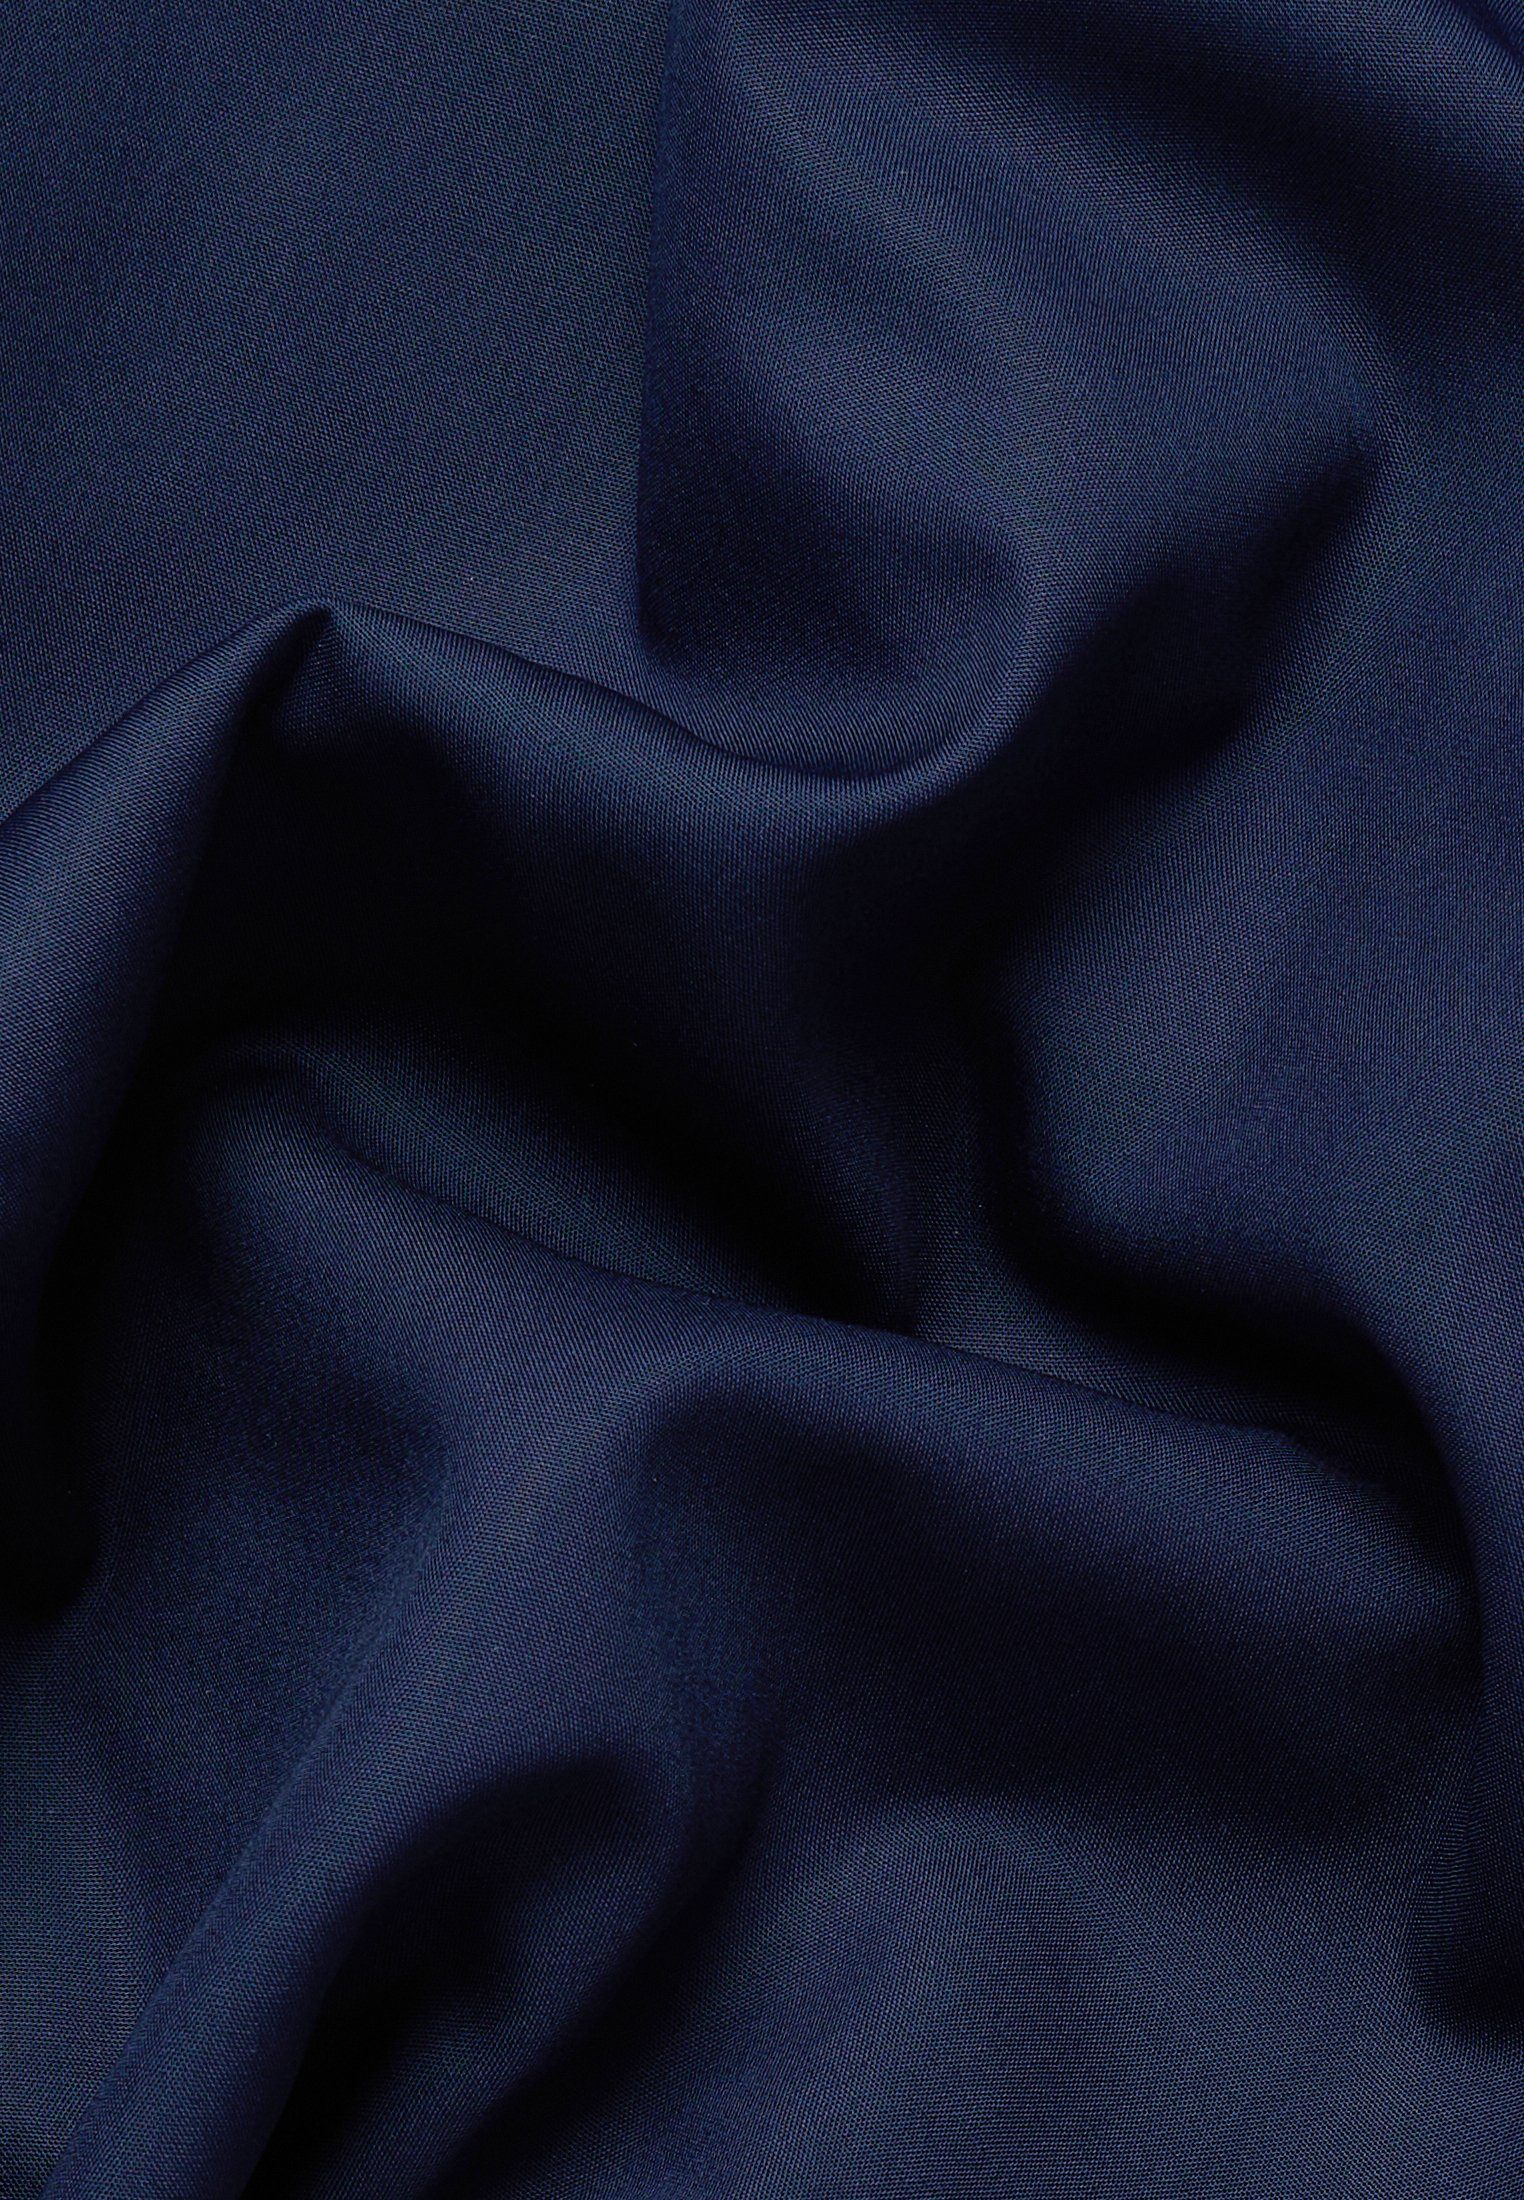 Eterna Langarmhemd Original Shirt Popeline Langarm Blau